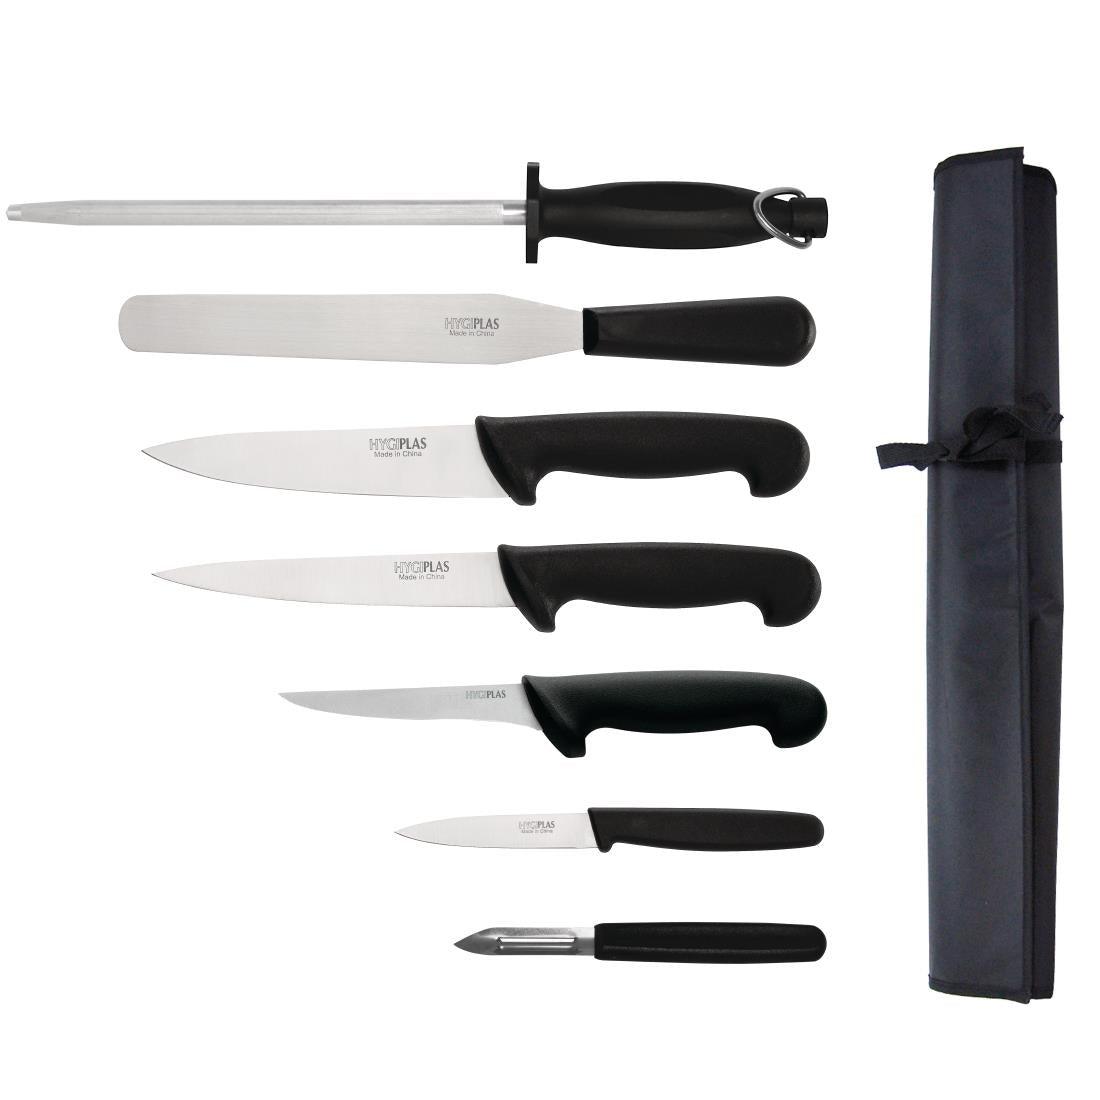 Hygiplas 20cm Chefs Knife Set - HospoStore